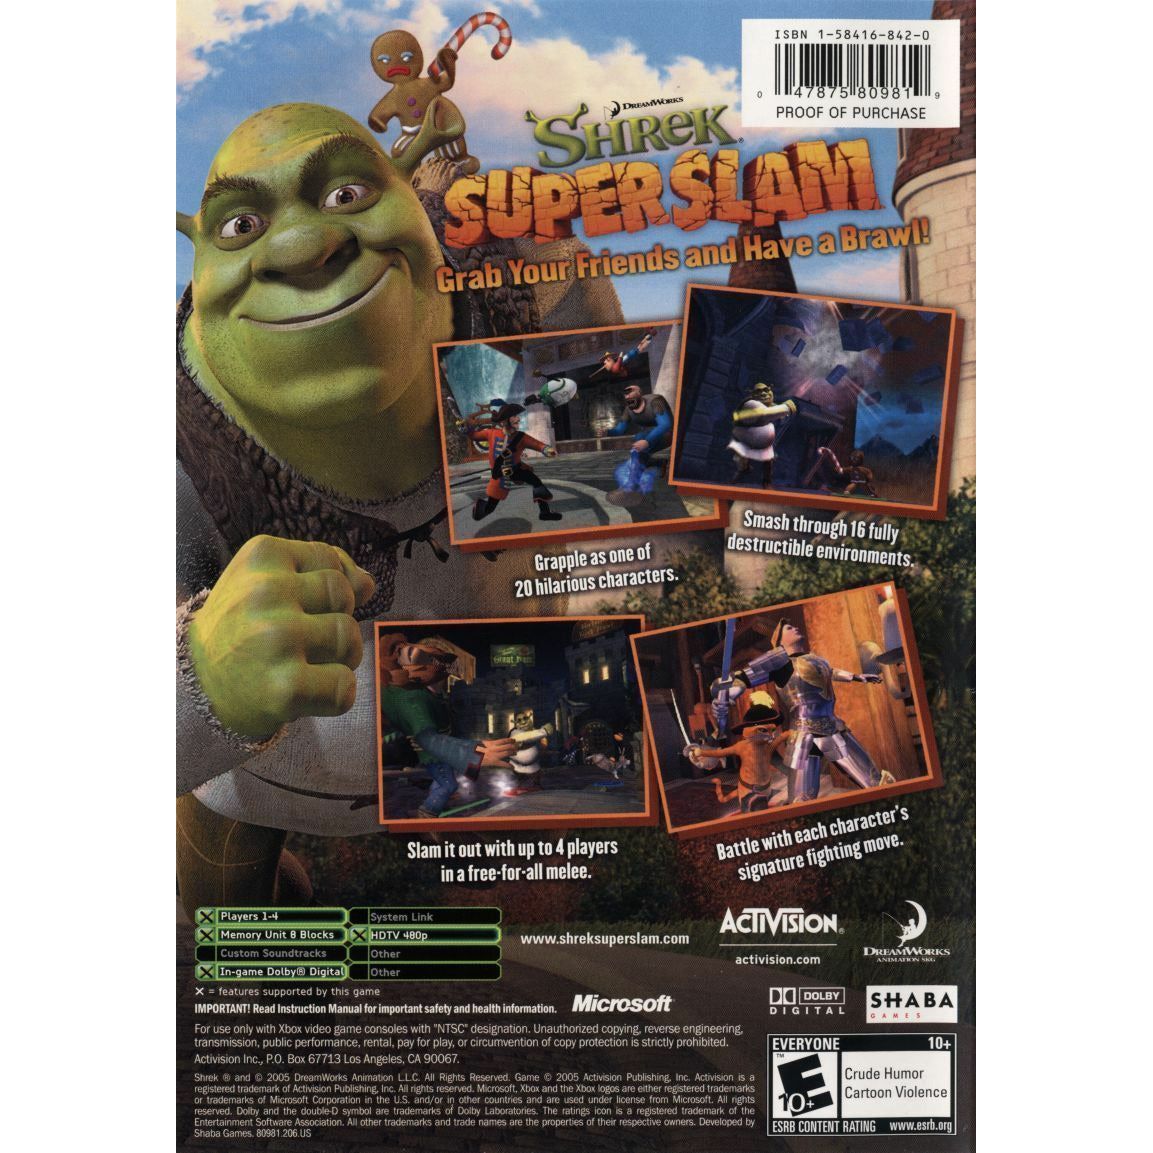 XBOX-Shrek Super Slam